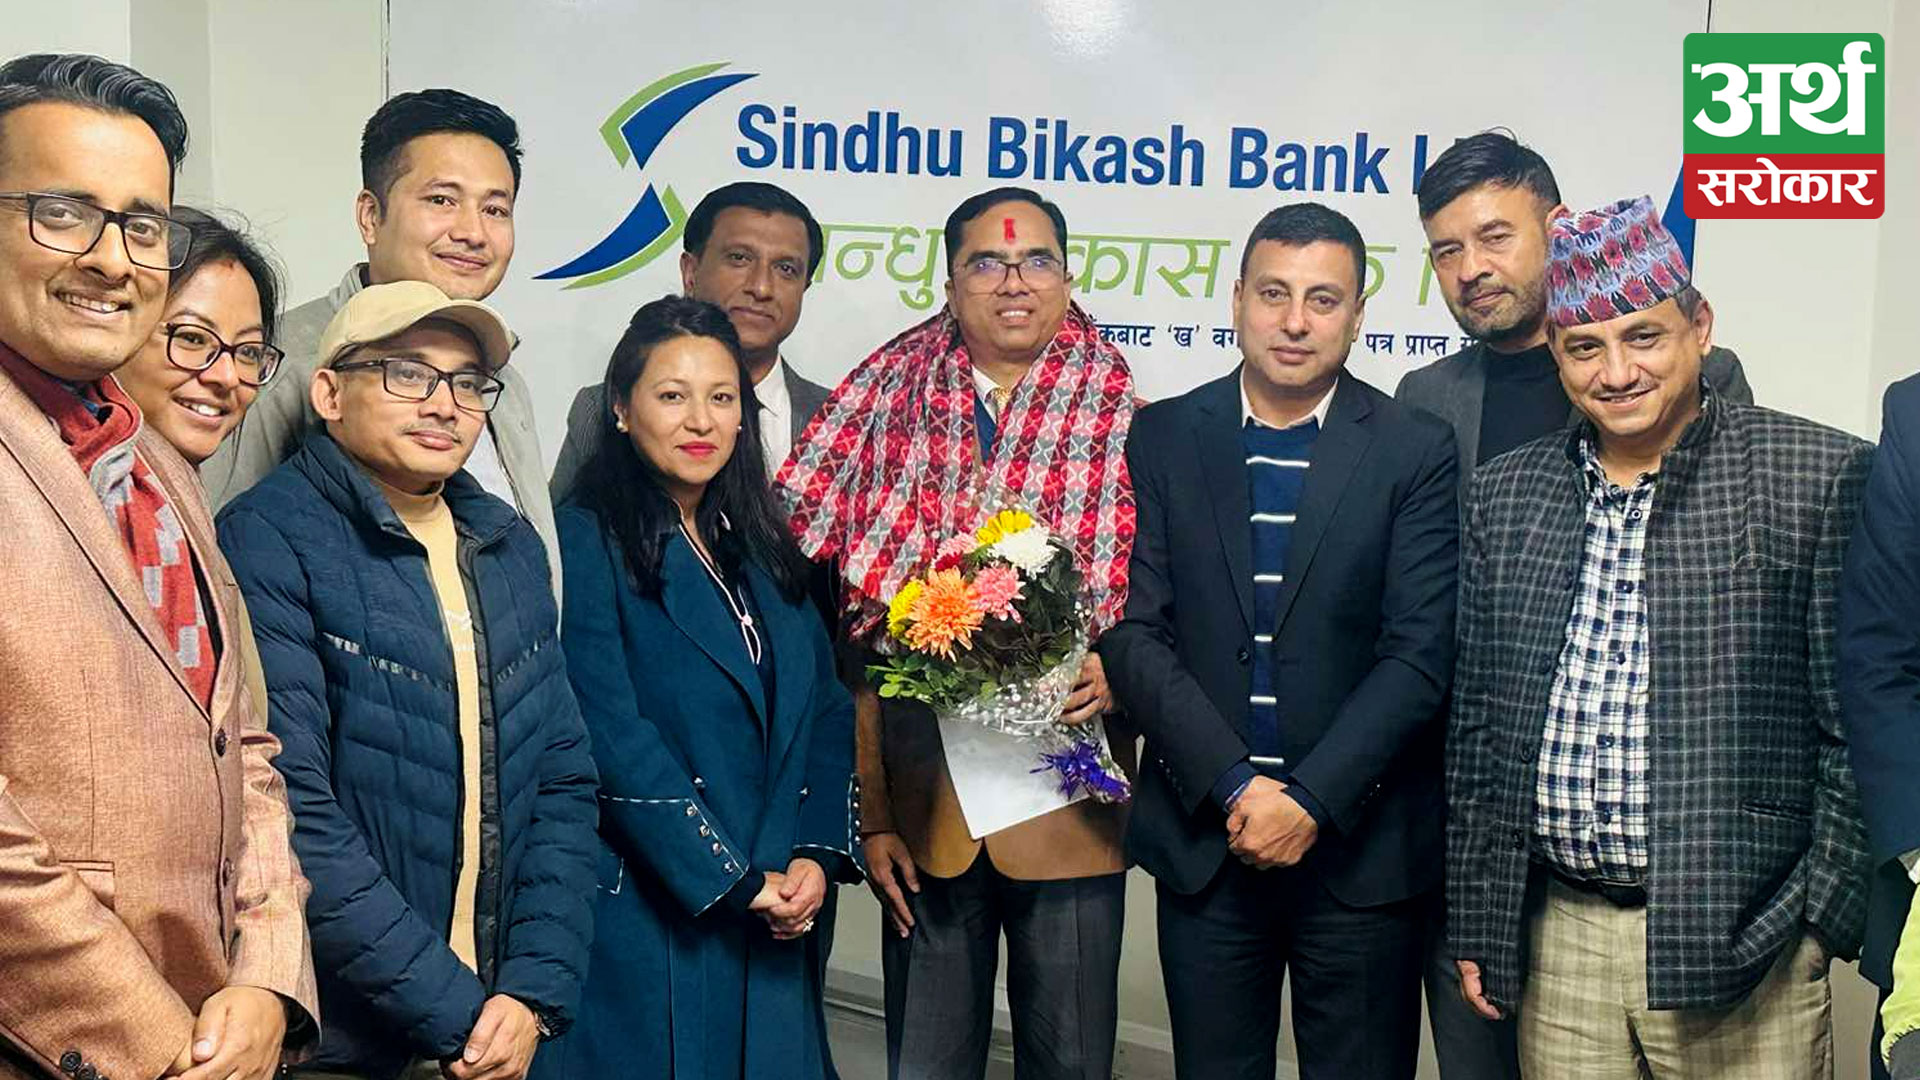 Ganesh Kumar KC appointed as the DCEO of Sindhu Bikash Bank